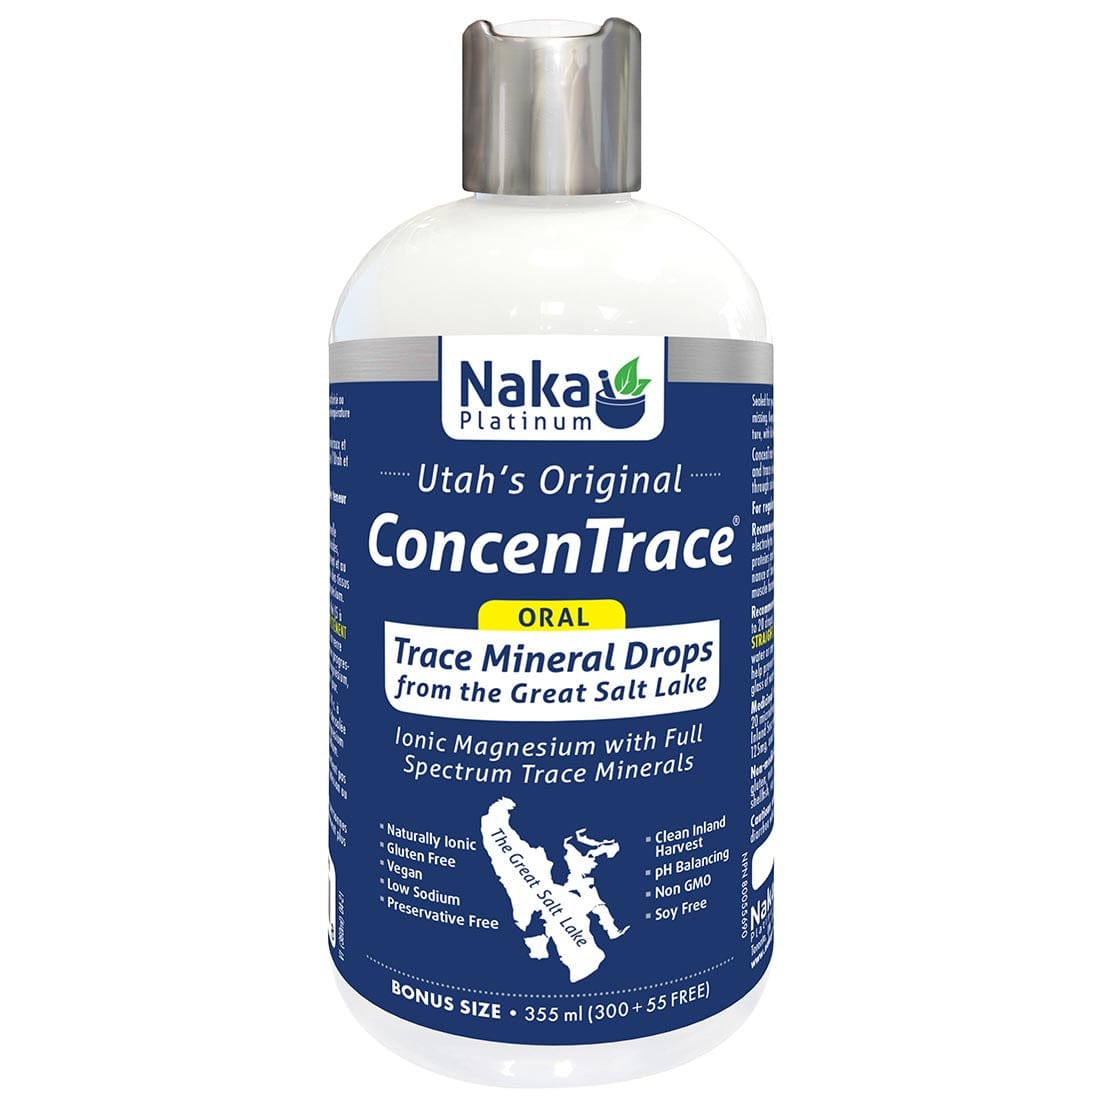 Naka Platinum ConcenTrace (Utah's Original) Oral, 355ml